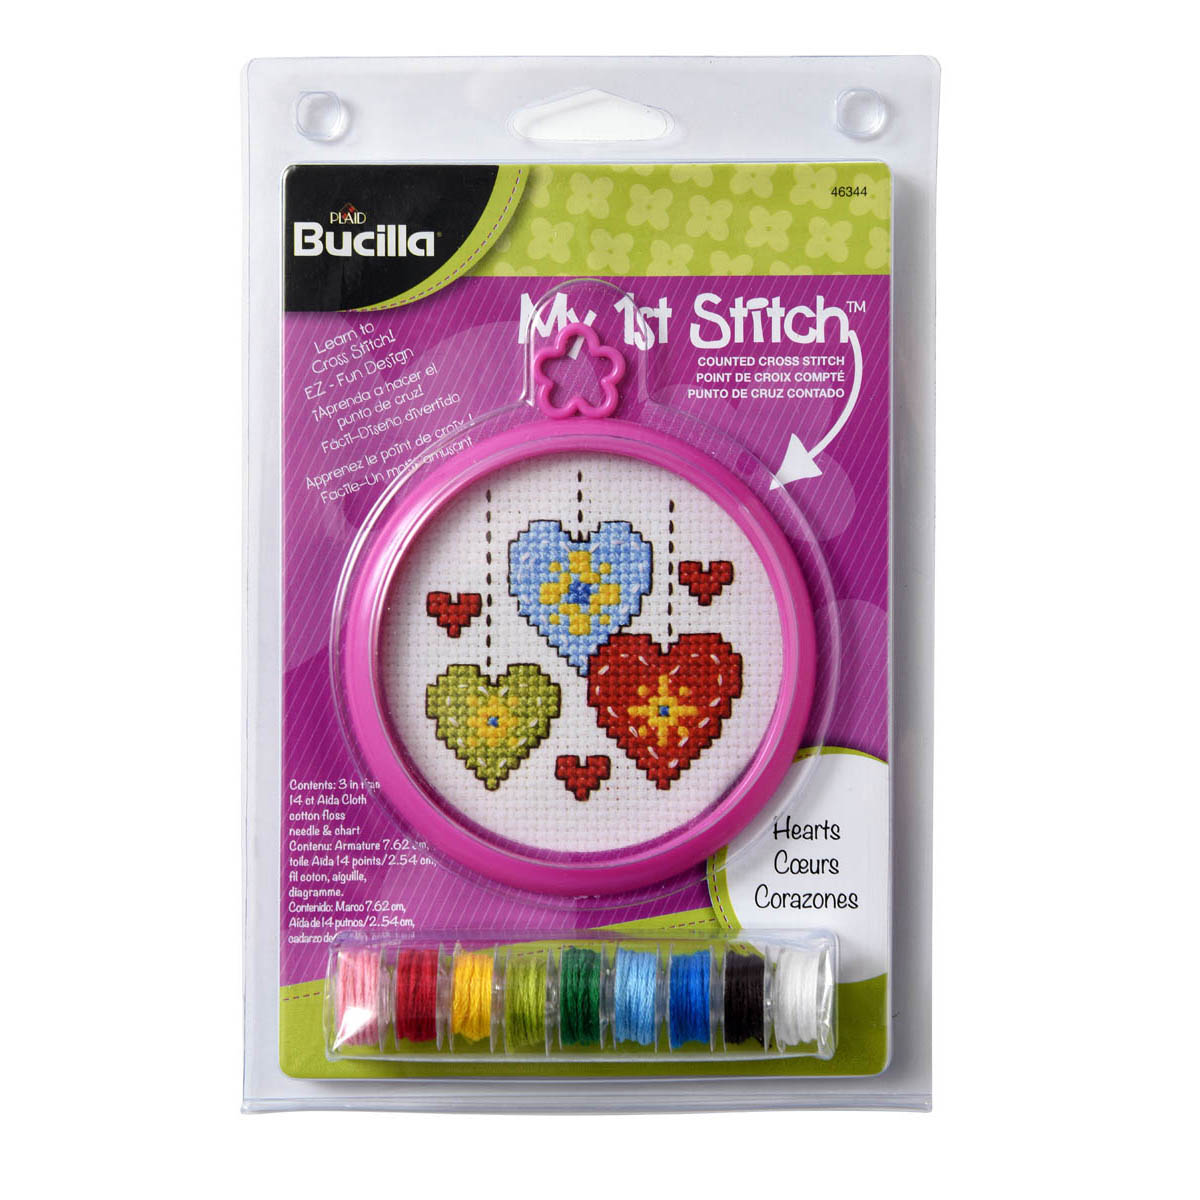 Bucilla ® My 1st Stitch™ - Counted Cross Stitch Kits - Mini - Hearts - 46344